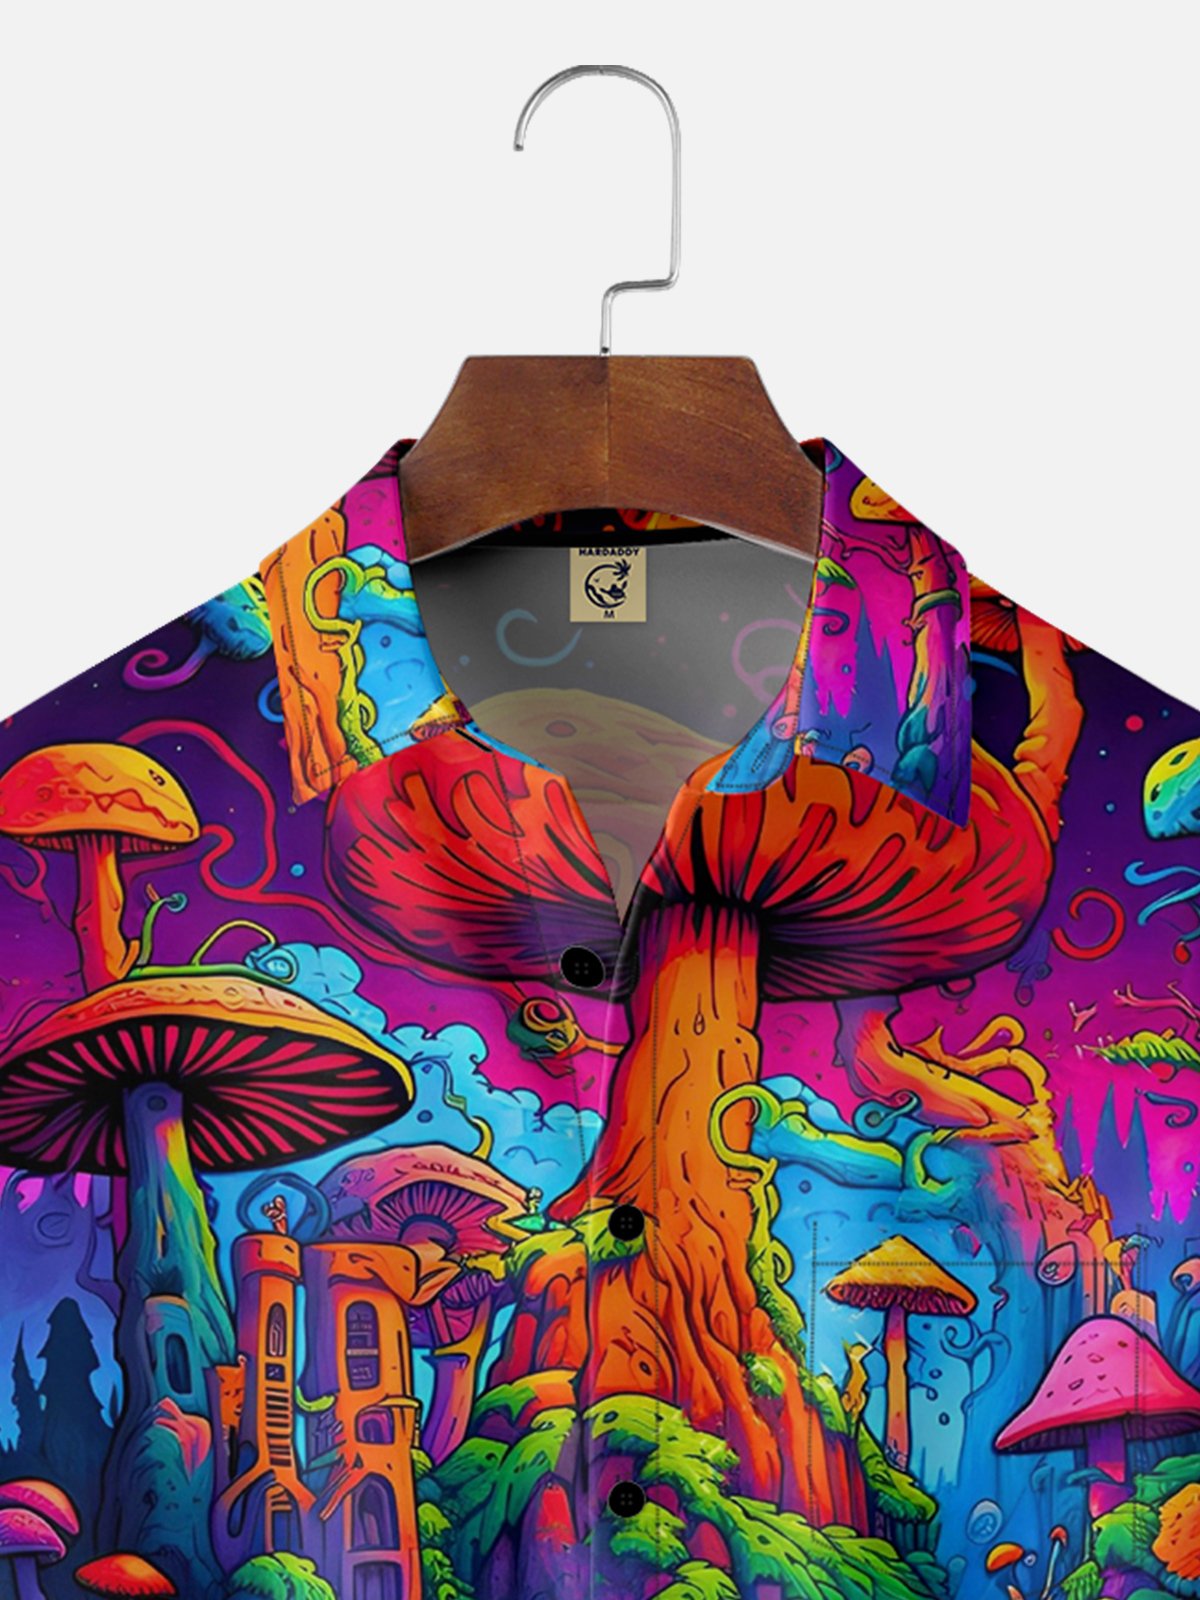 Moisture-wicking Alien Mushroom Chest Pocket Hawaiian Shirt